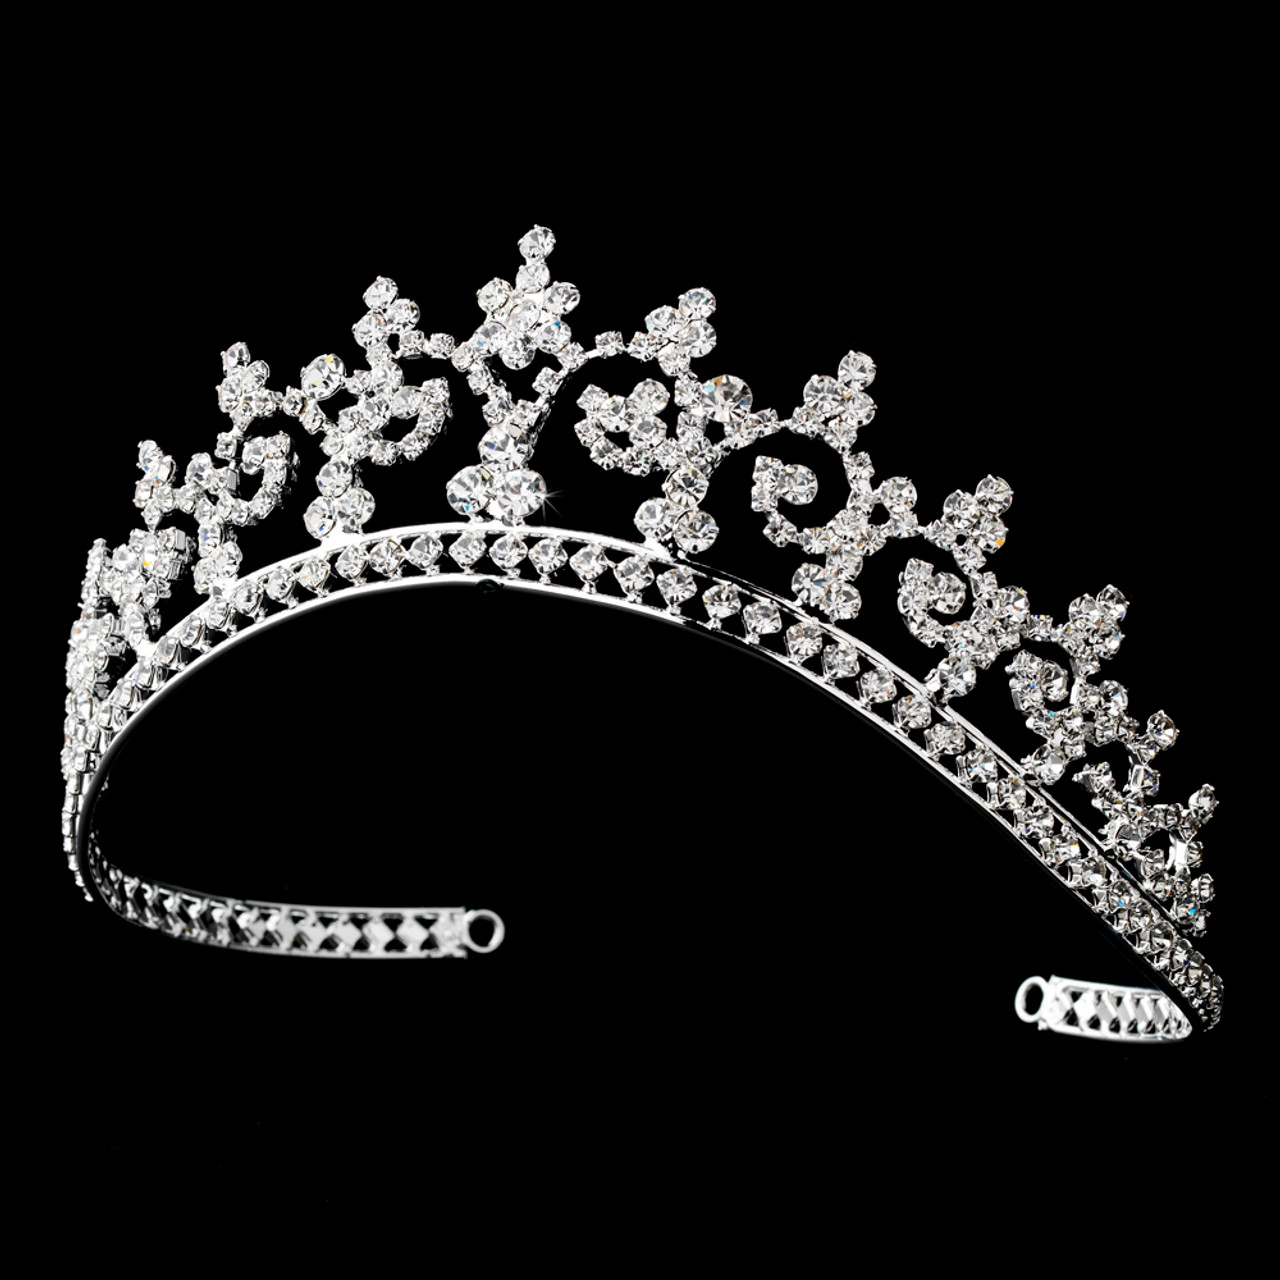 Royal Rhinestone Crown Tiara in Radiant Silver 167